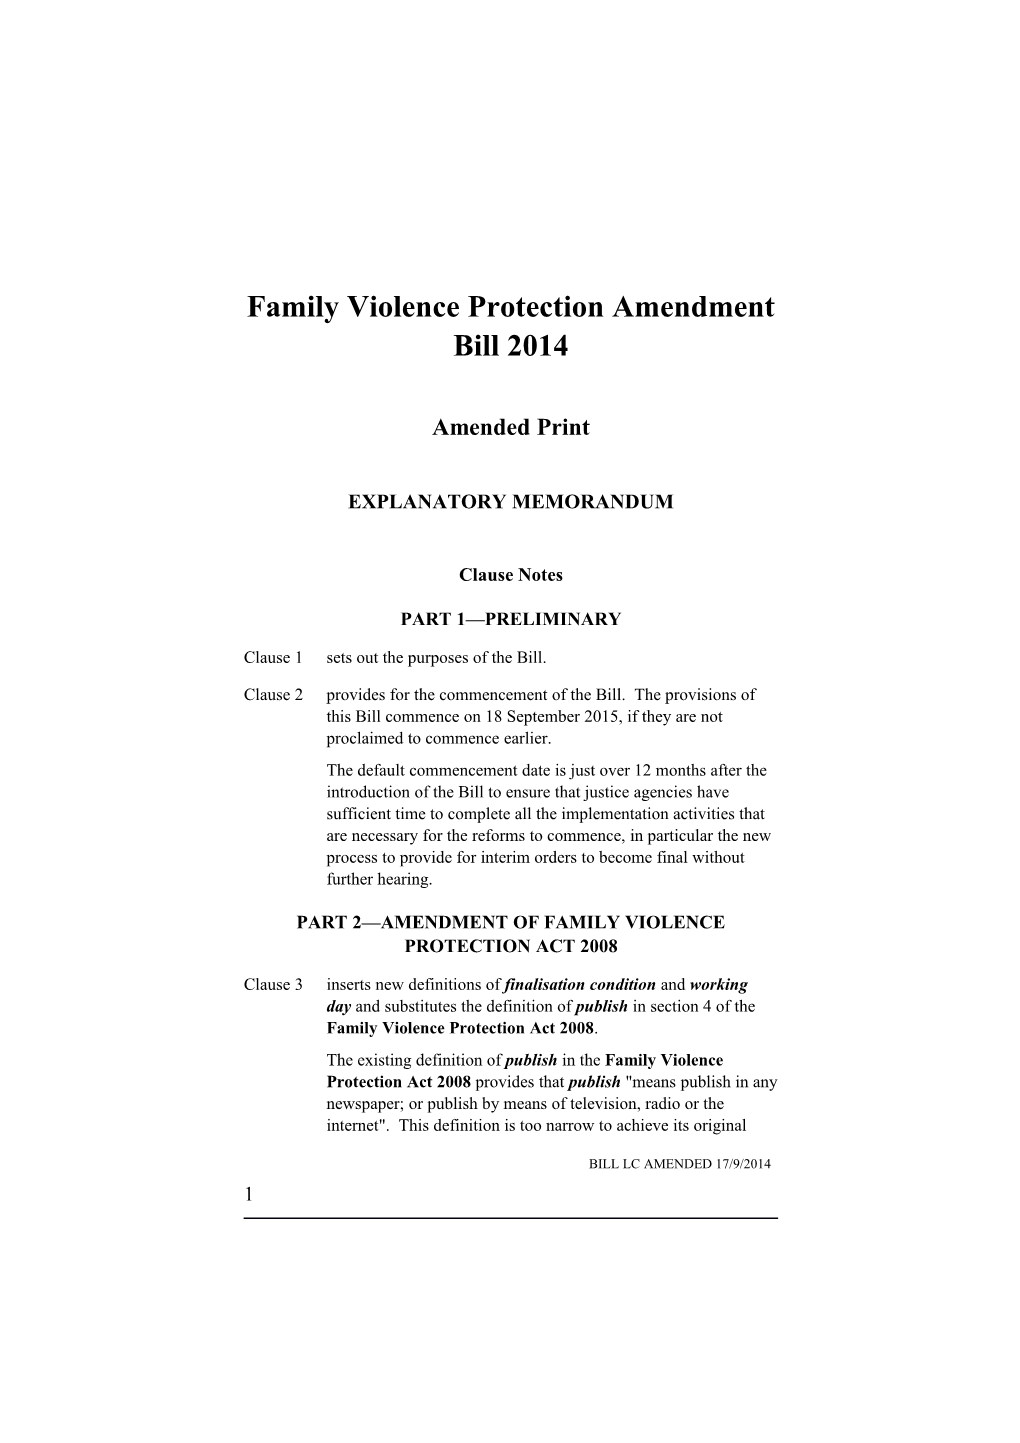 Family Violence Protection Amendment Bill 2014